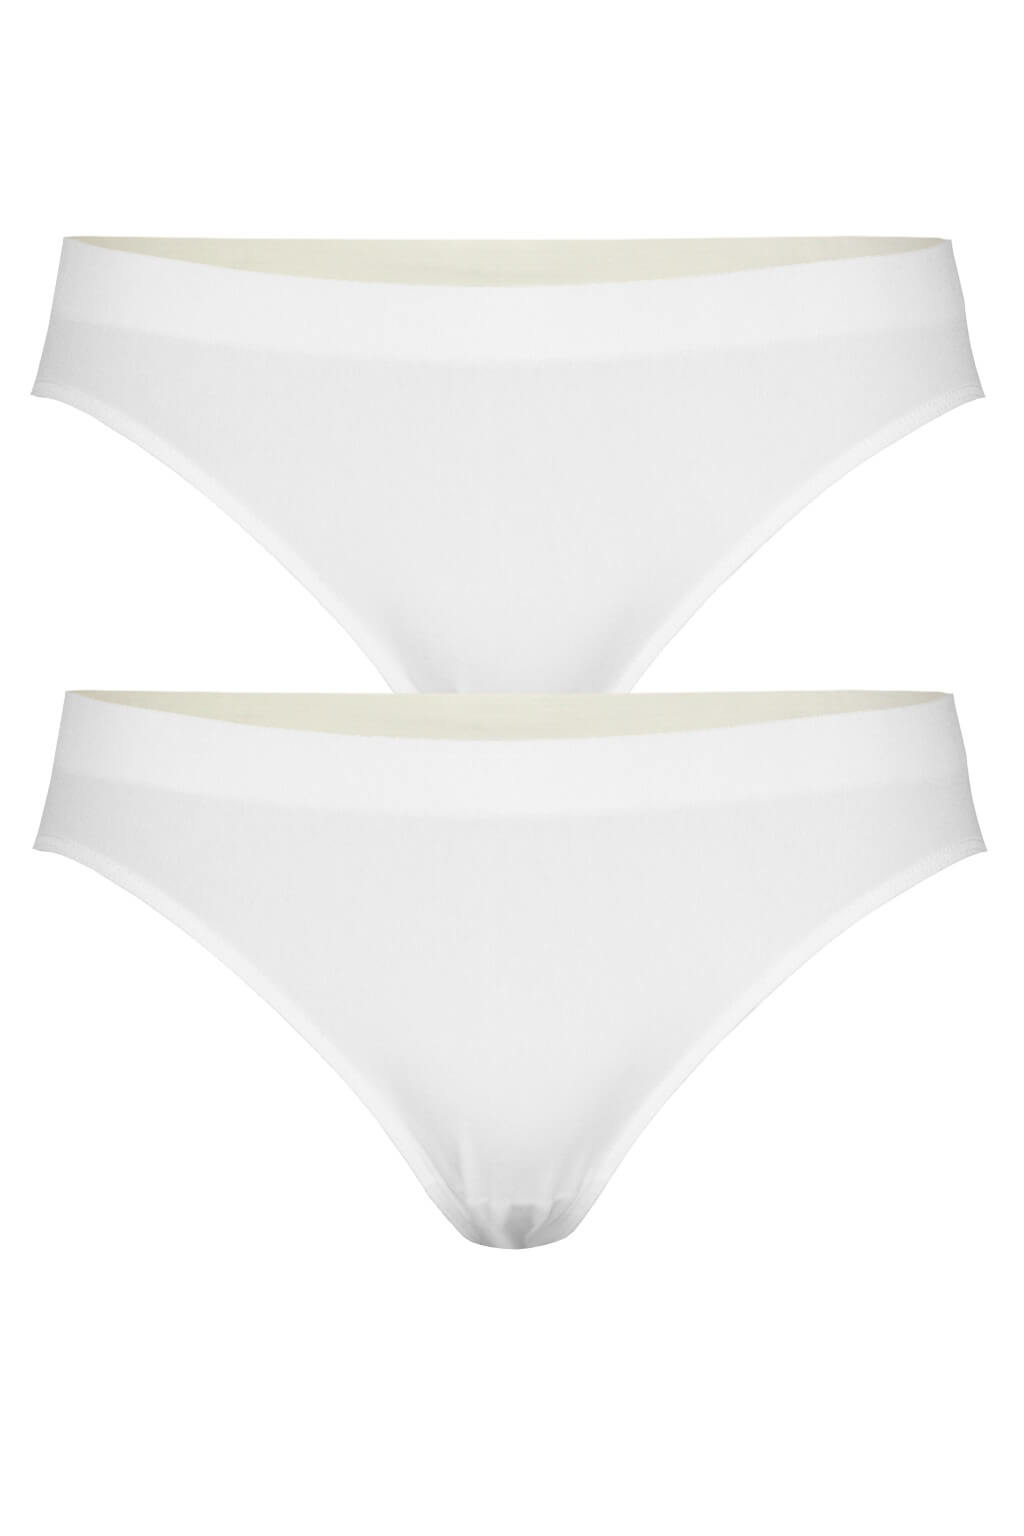 Bellinda Seamless Comfort - hladké kalhotky 2 ks M bílá